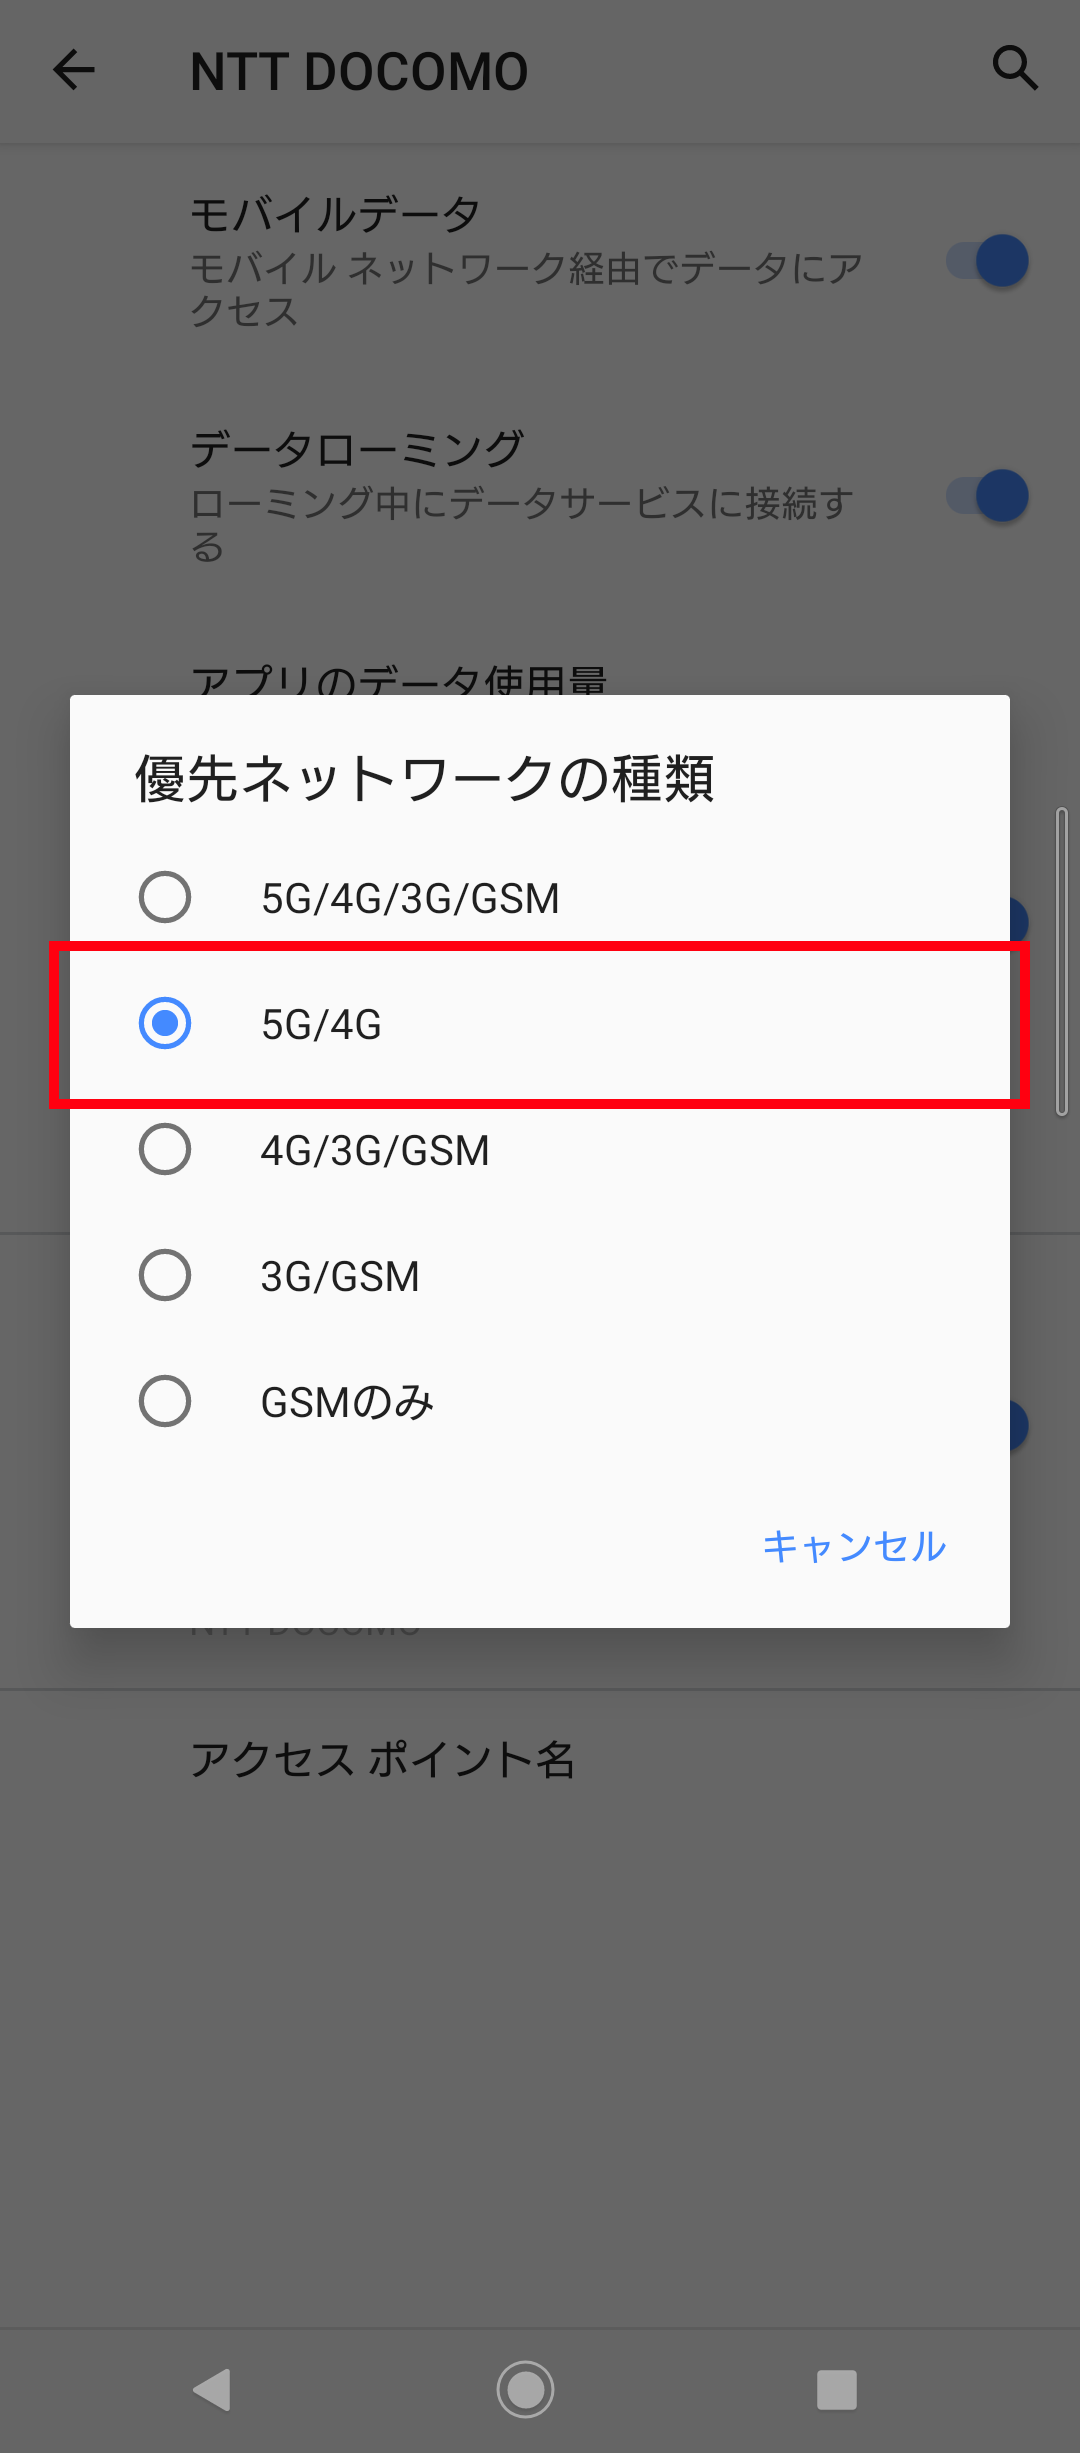 「5G/4G」を選択